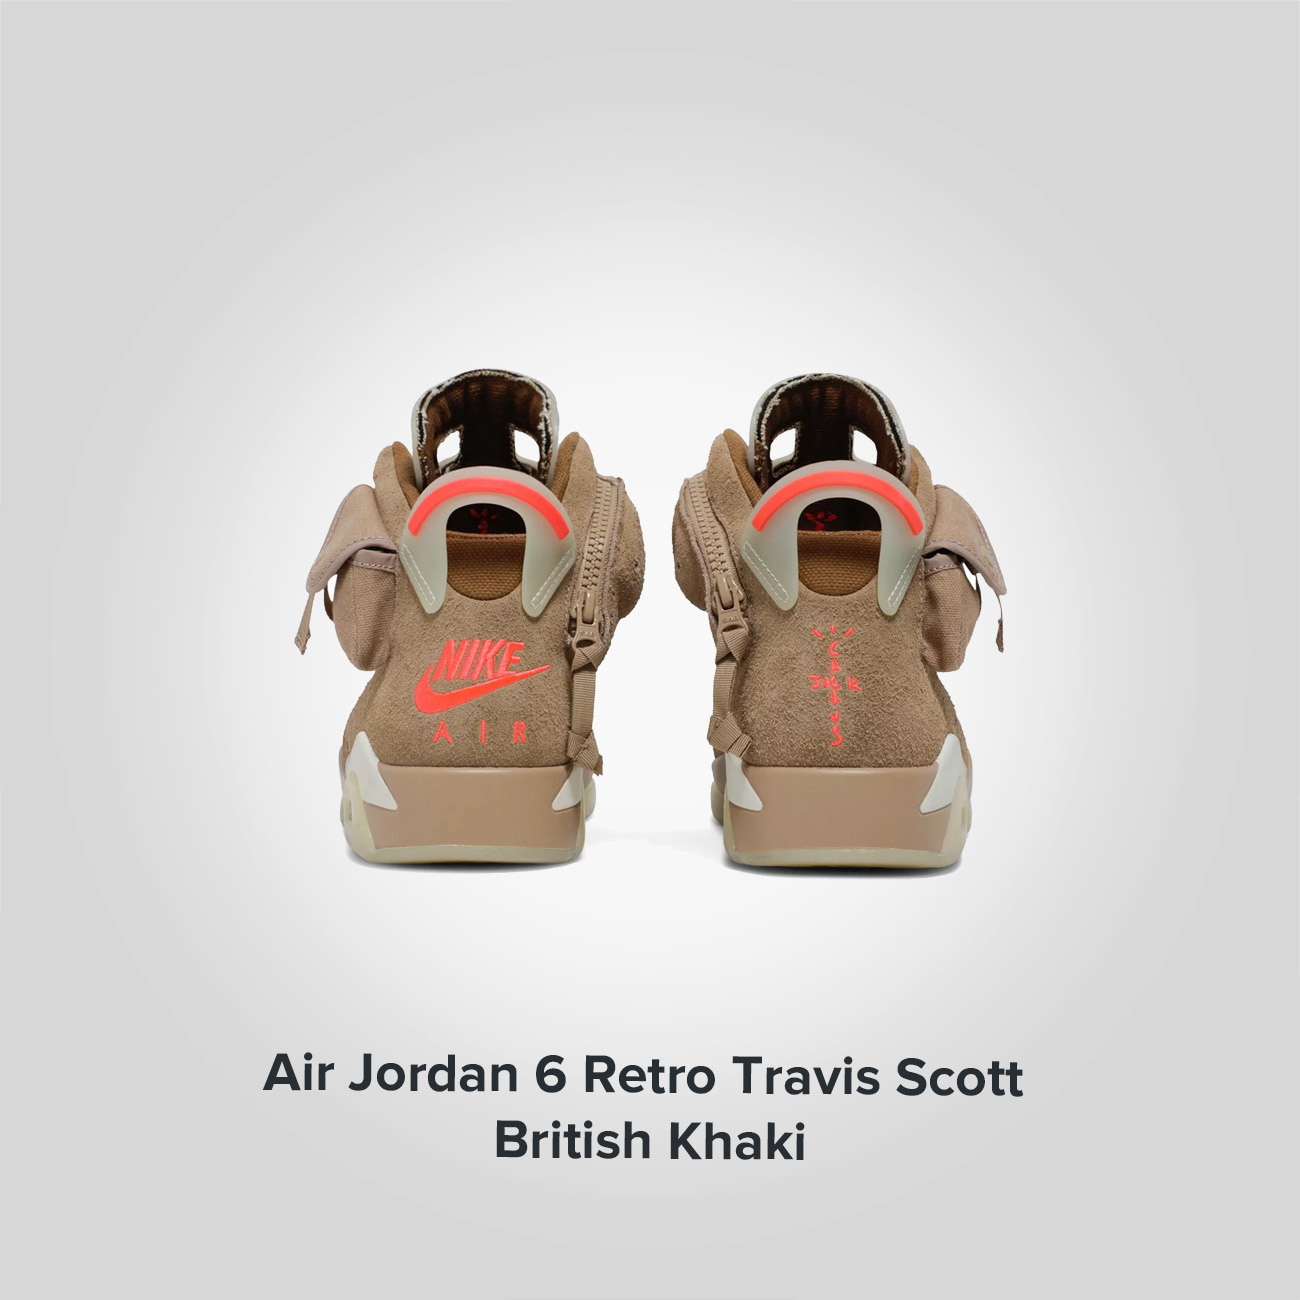 Jordan 6 Retro Travis Scott British Khaki